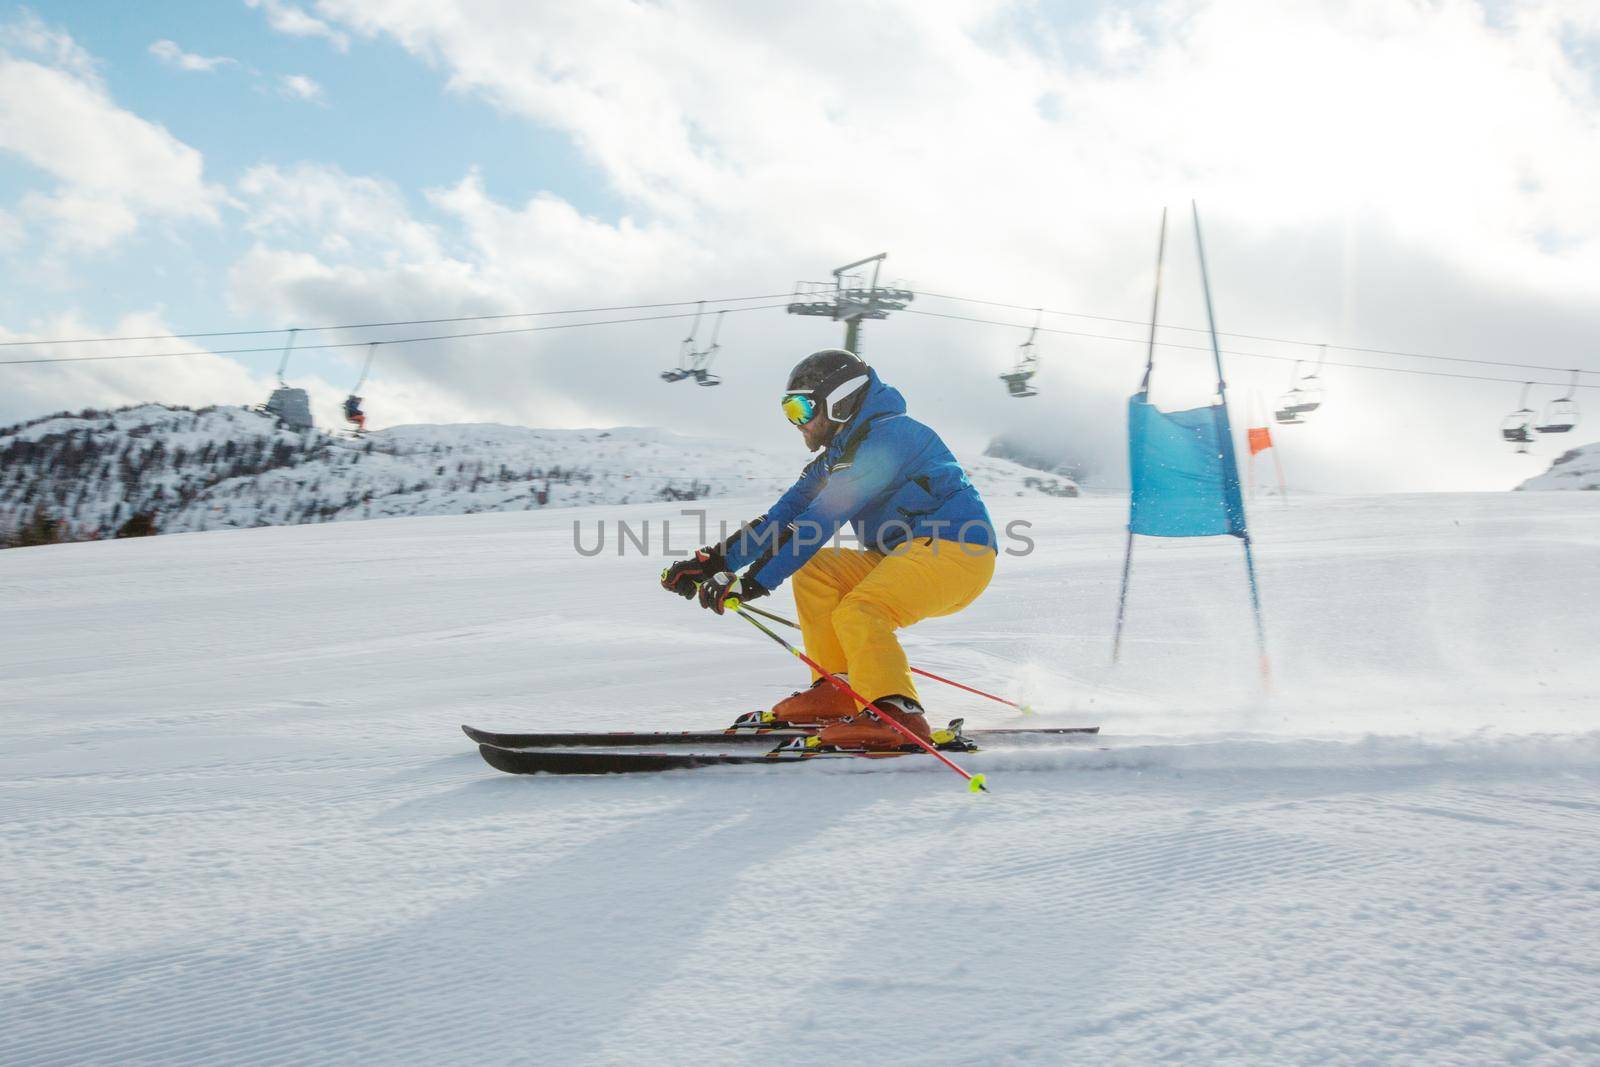 Slalom Skier attacks a gate by destillat